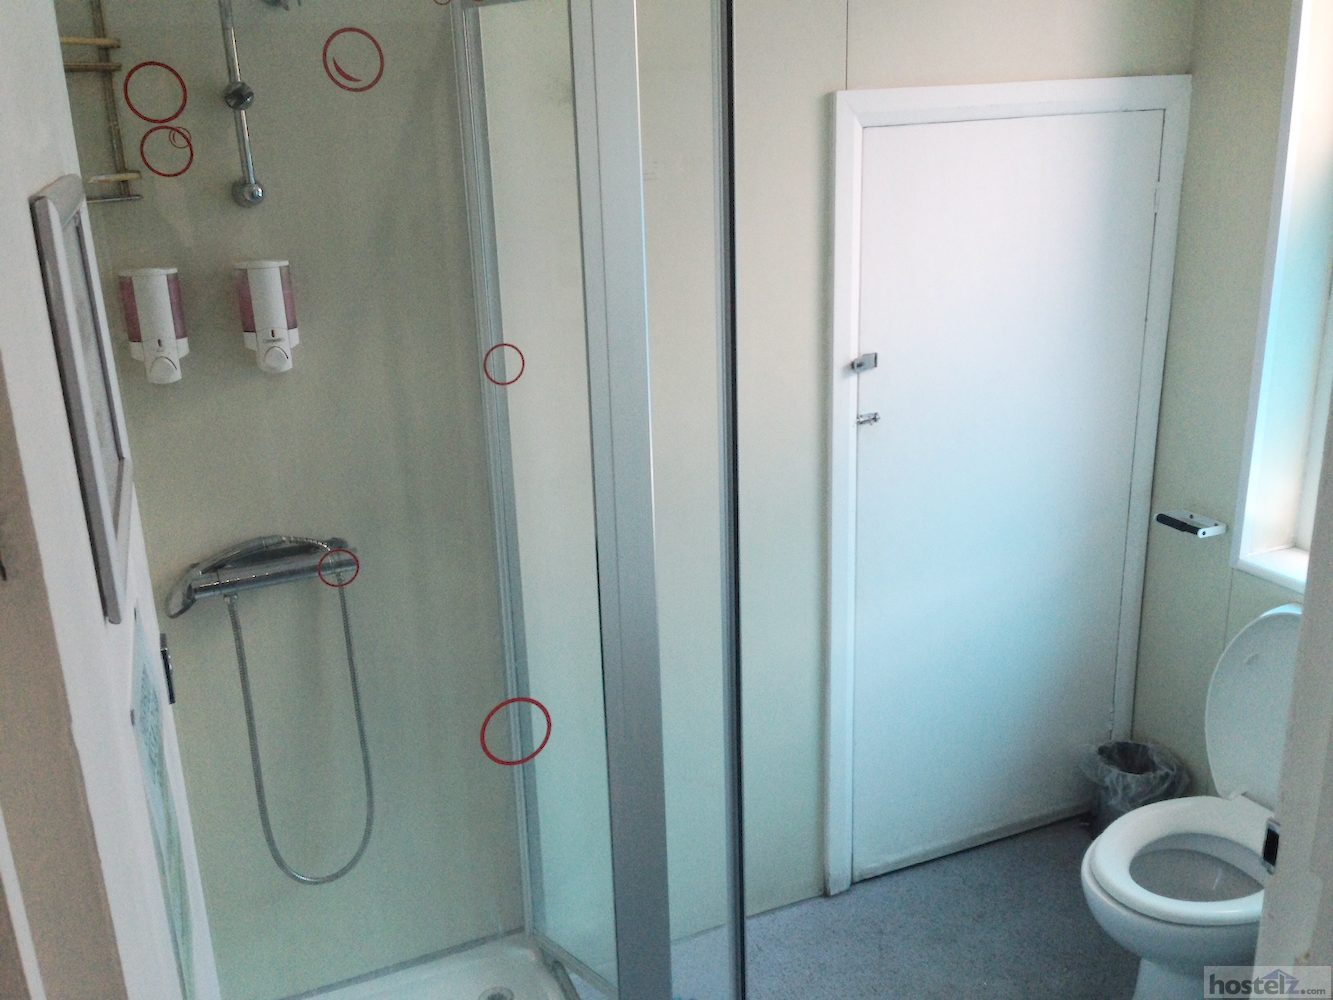 Combined shower & toilet